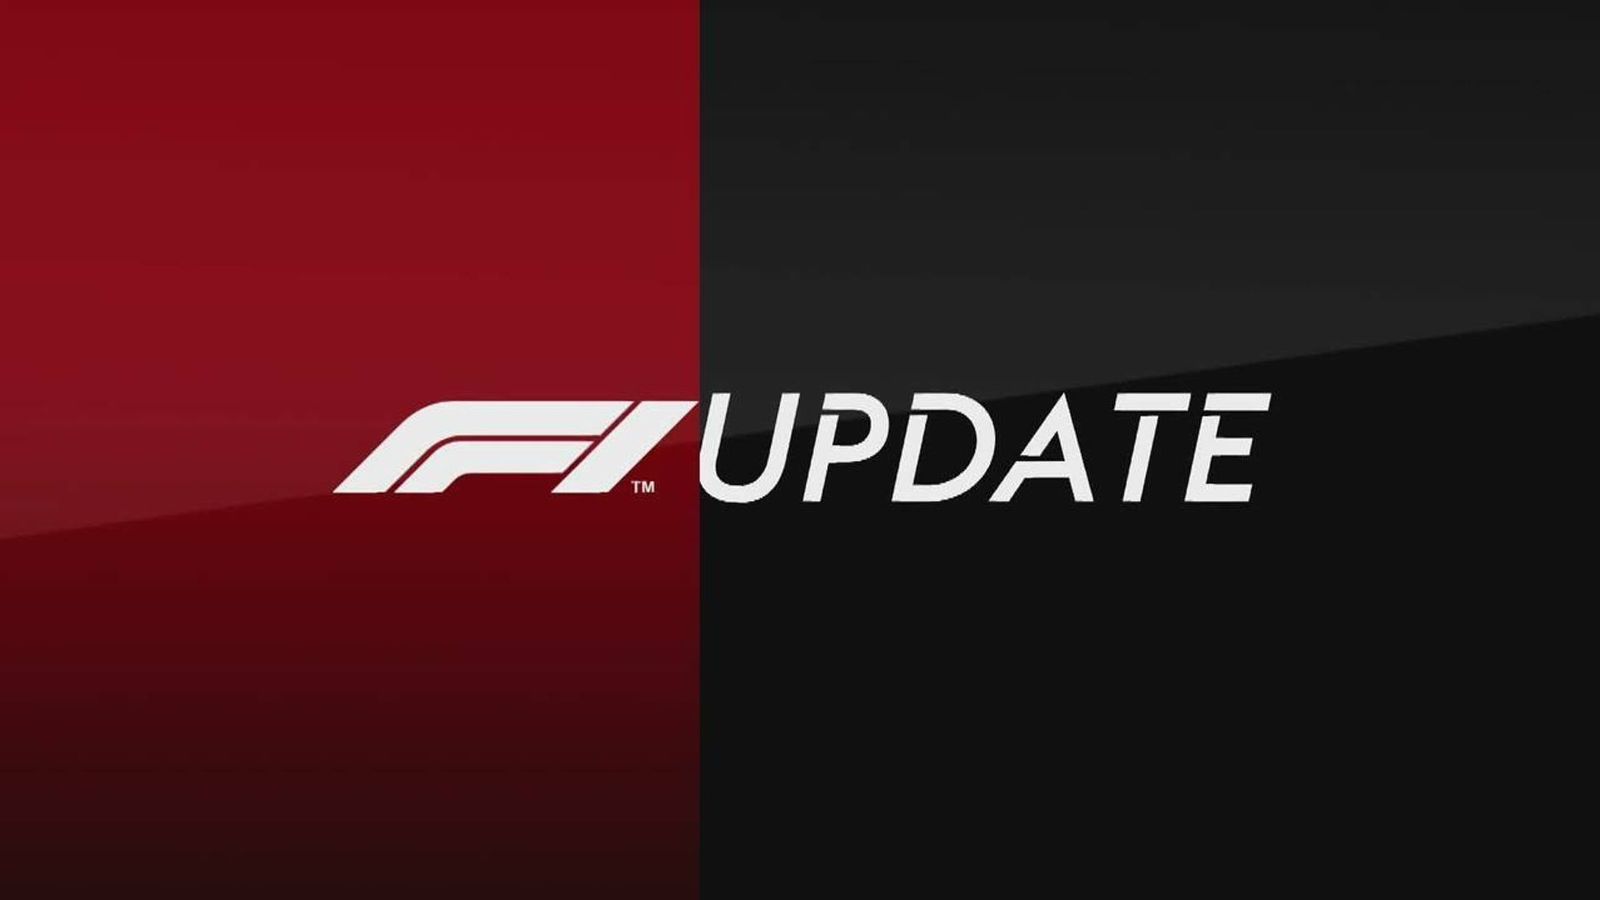 Formel 1 Update and Formel 1 Analyse Alles zur F1-Saison 2023 auf Sky Formel 1 News Sky Sport